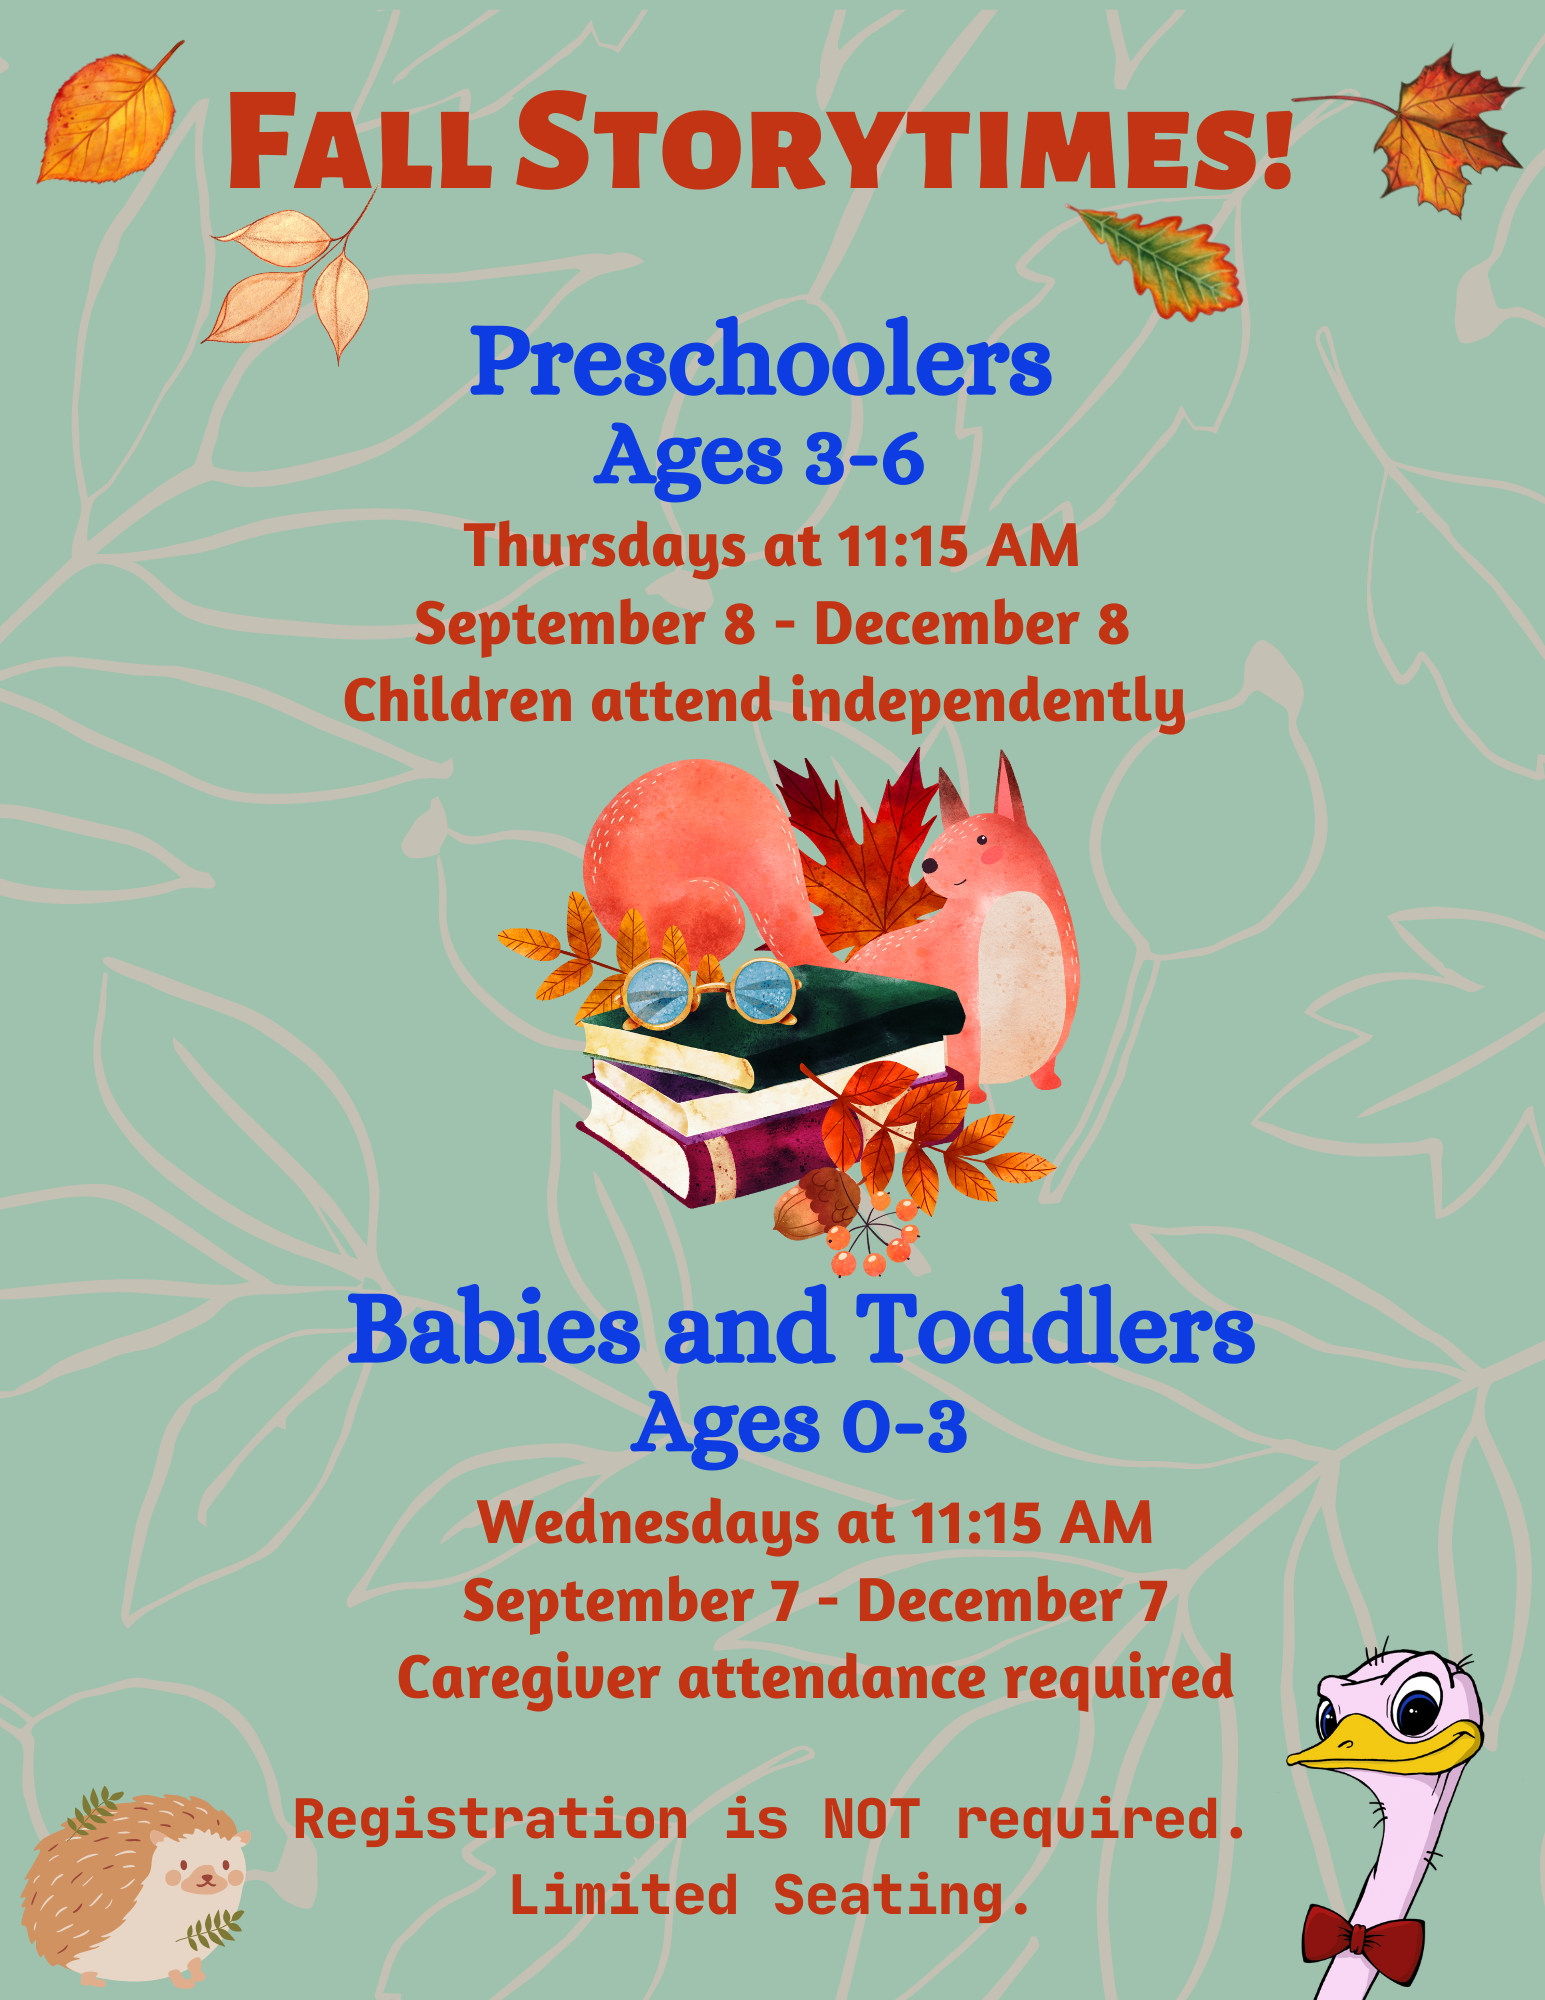 Fall Storytime Baby Toddler Wednesdays 11:15, Preschool Thursdays 11:15